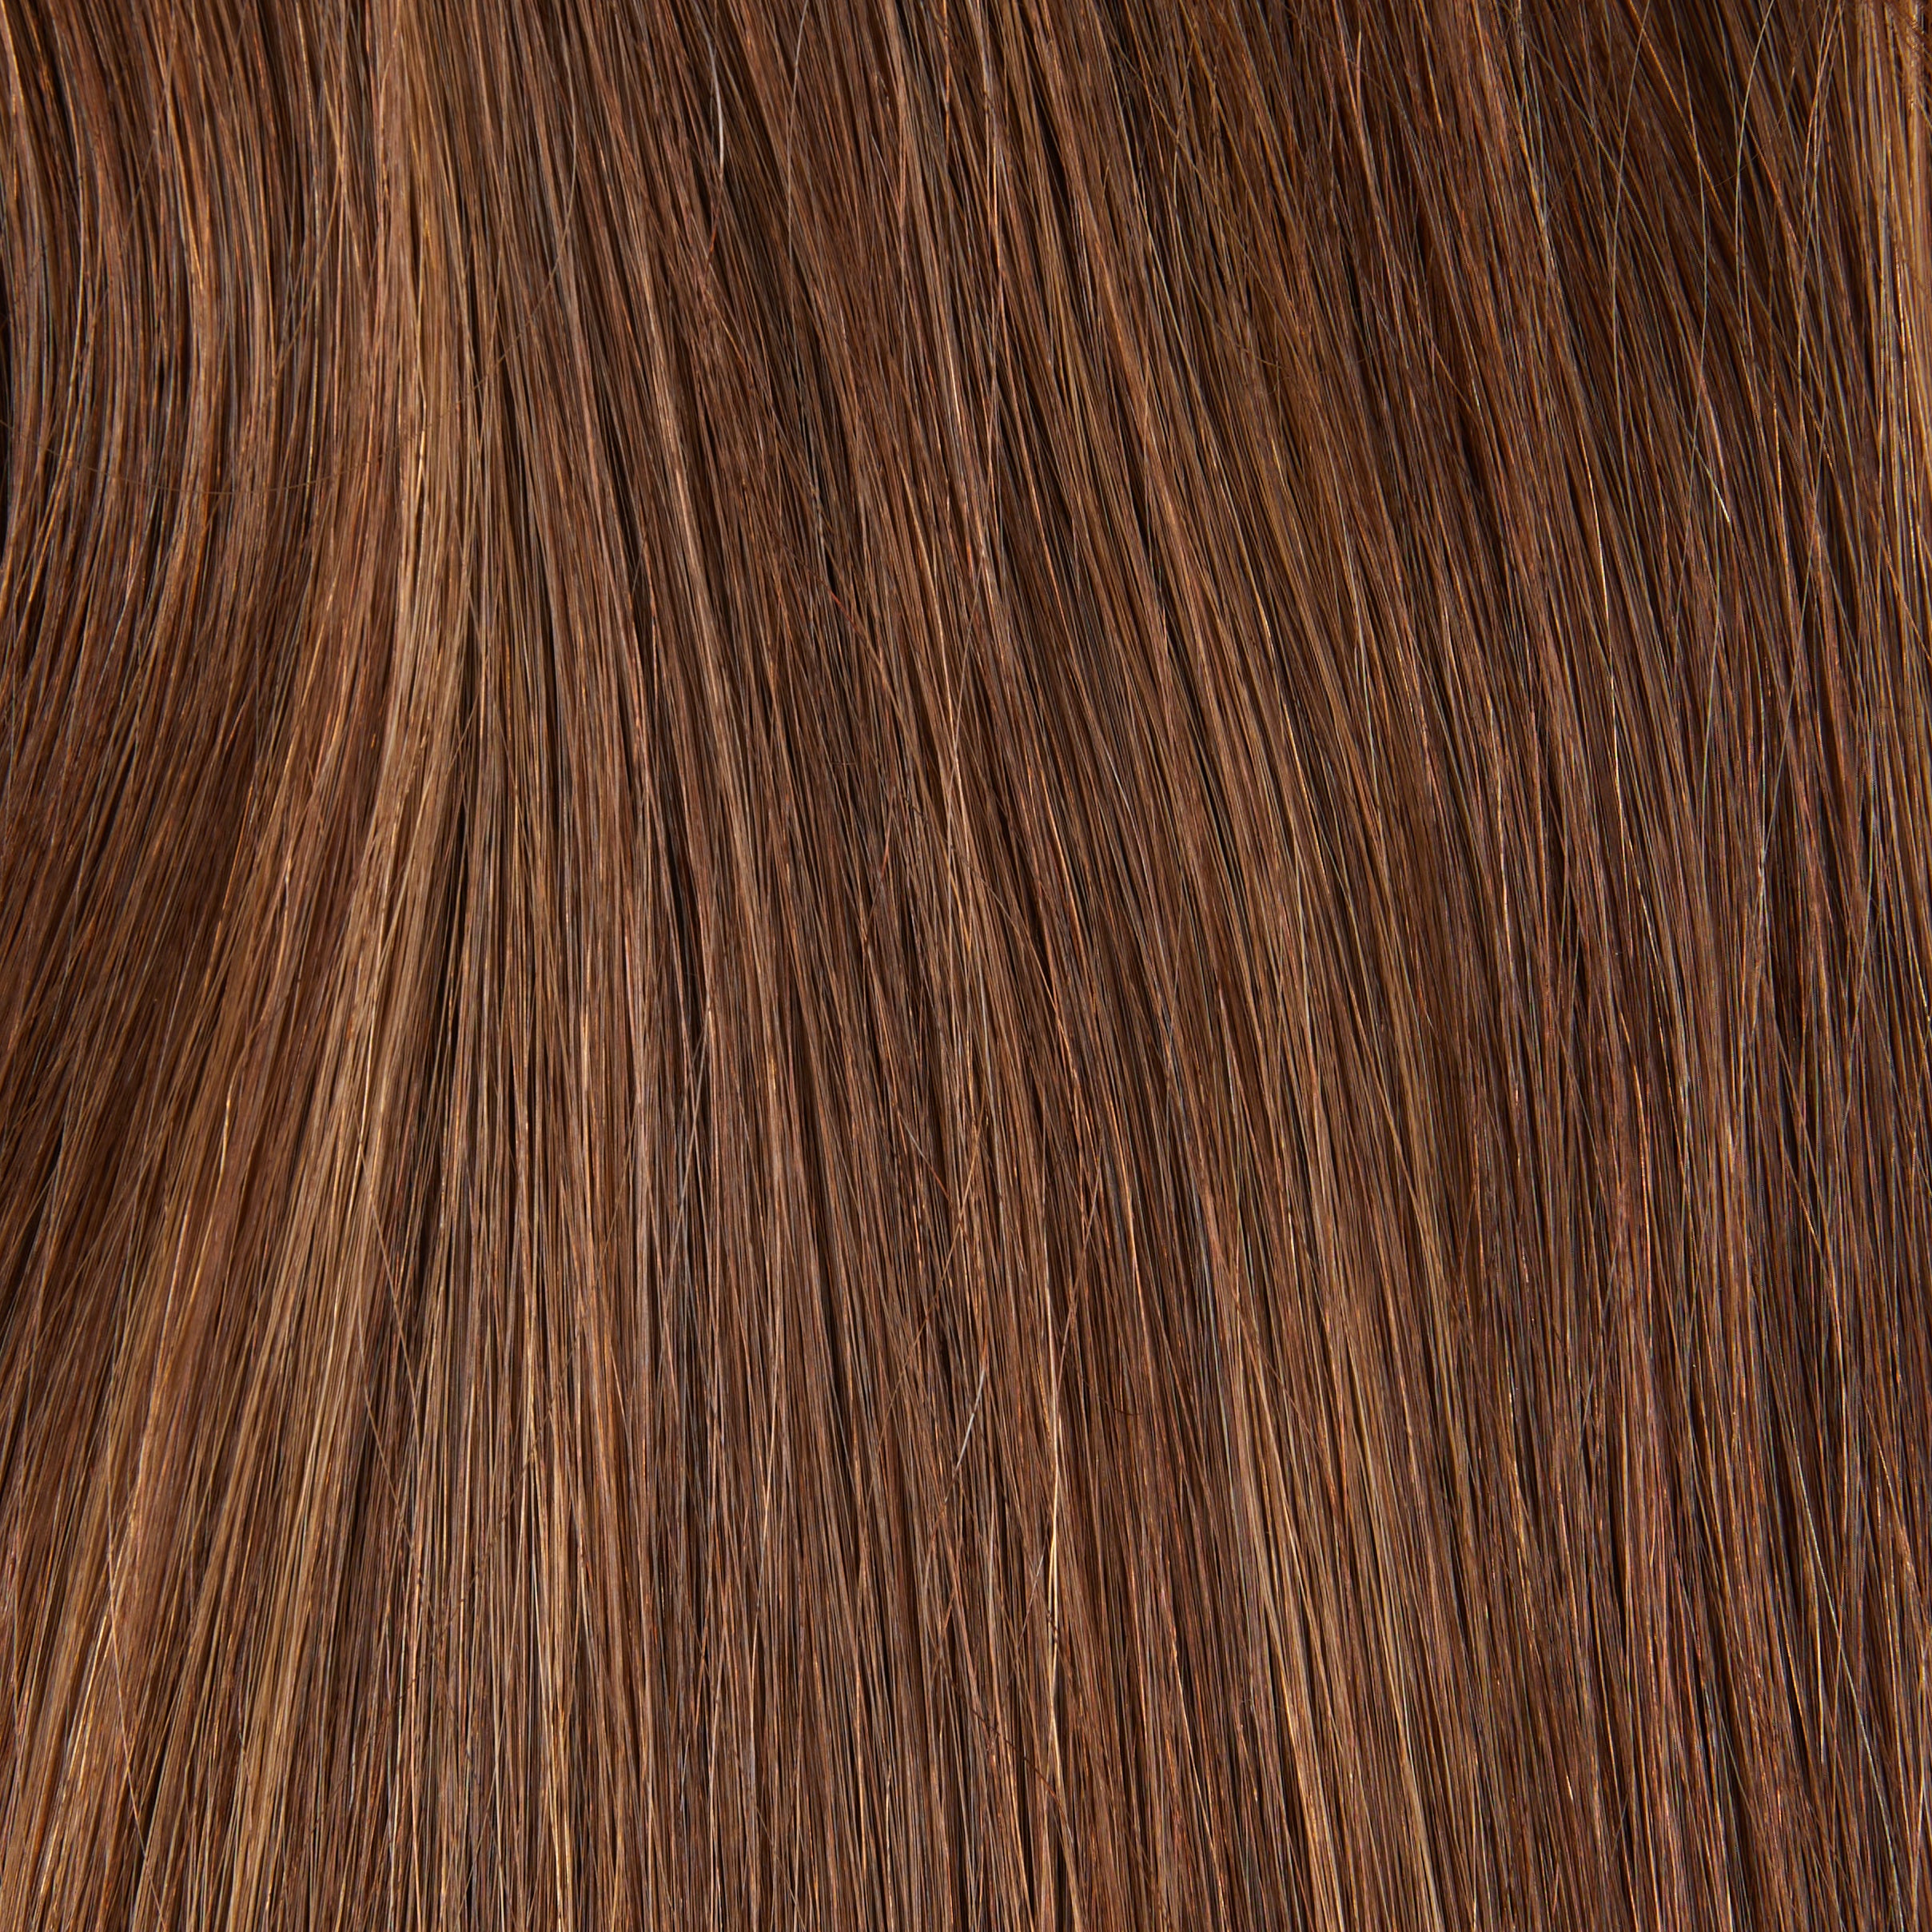 Light Brown W/ Blond Highlights #10-6-8 Hair Extension